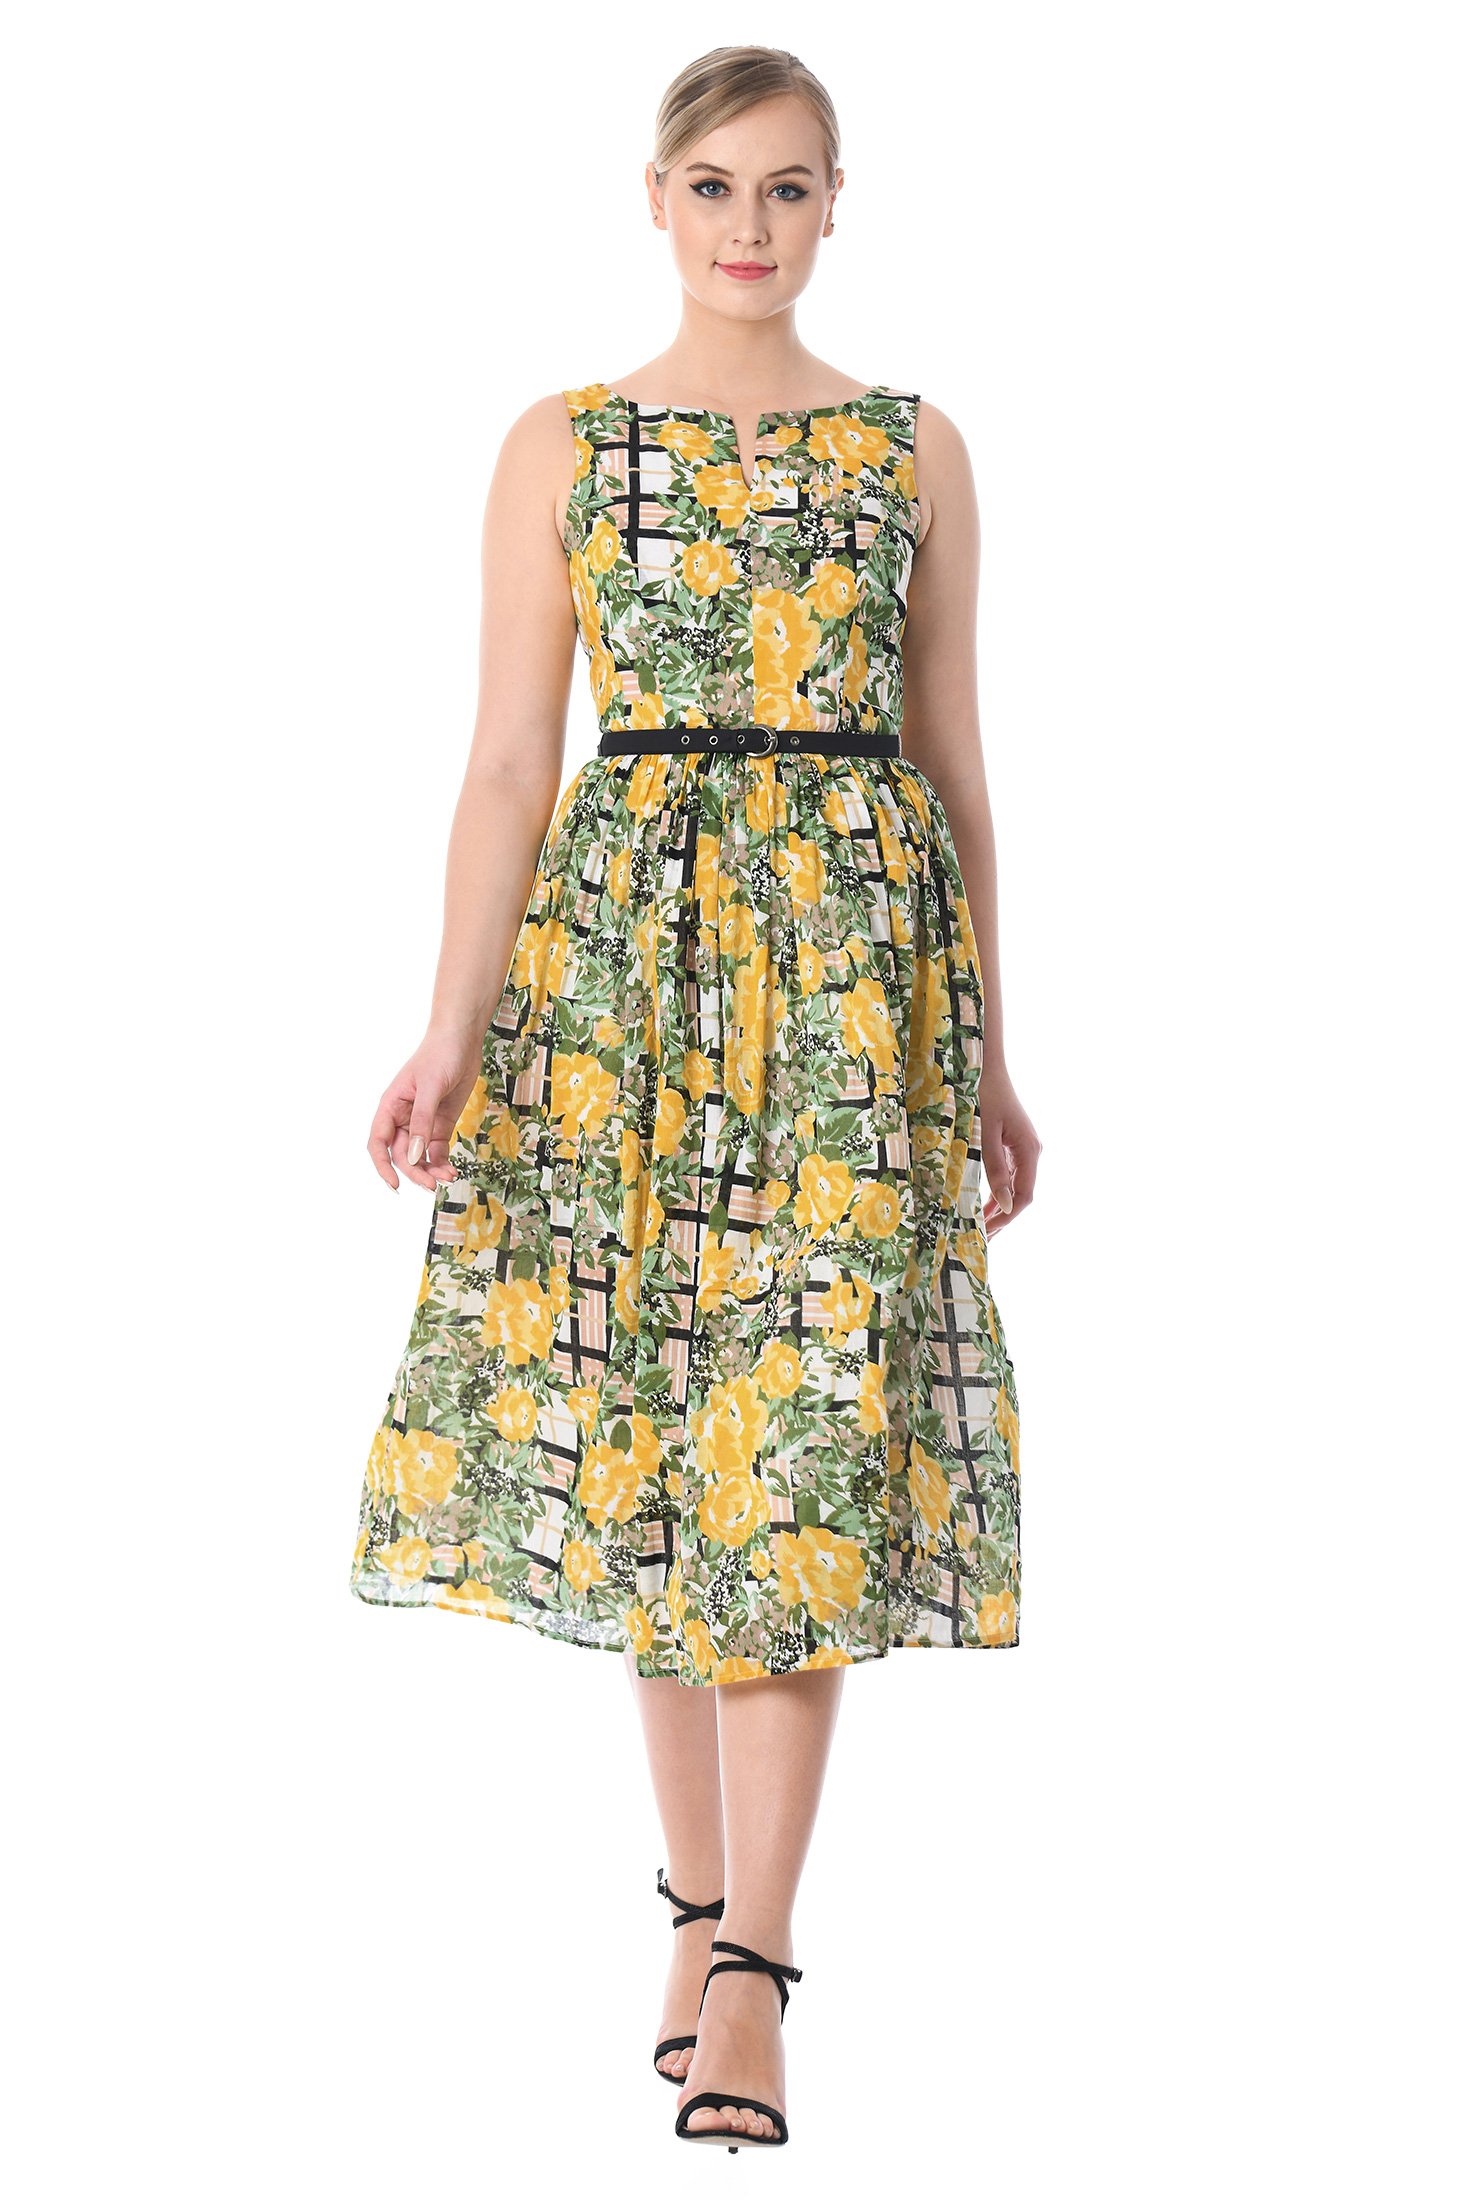 Shop Floral print cotton crinoline underlayer dress | eShakti